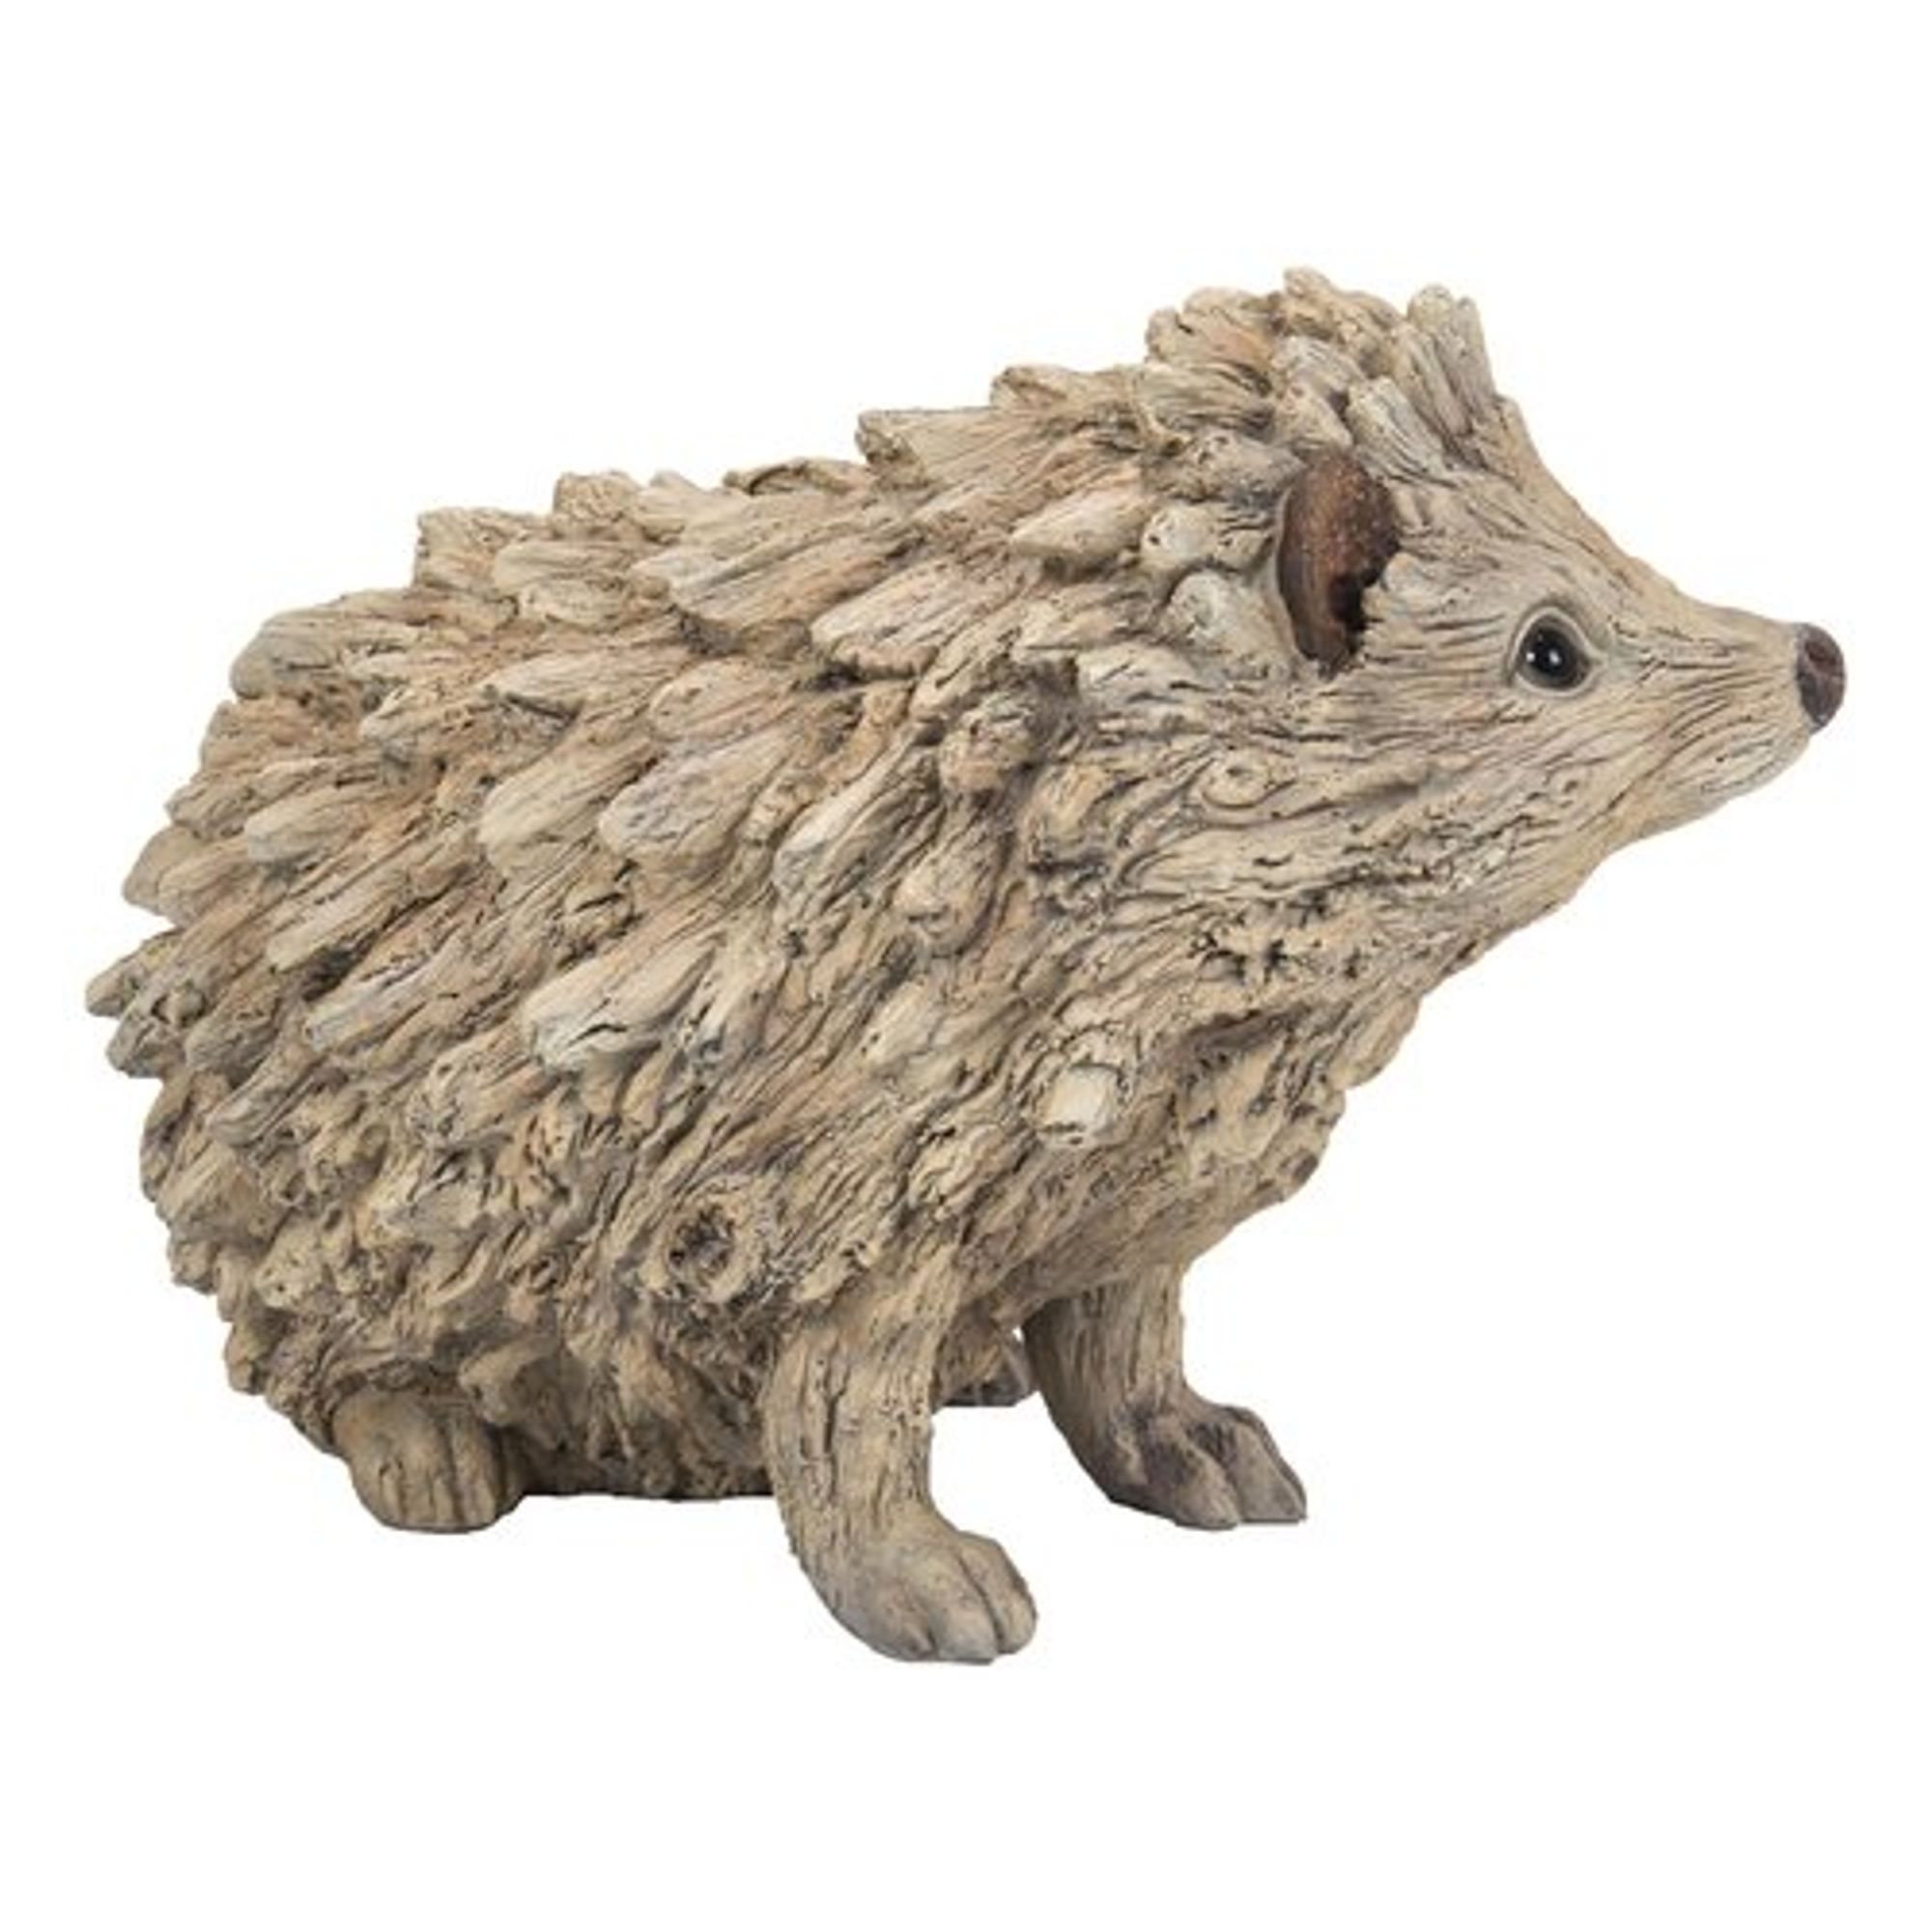 Garden New Hedgehog Driftwood Look Figurine Life Like Figurine Statue Home 